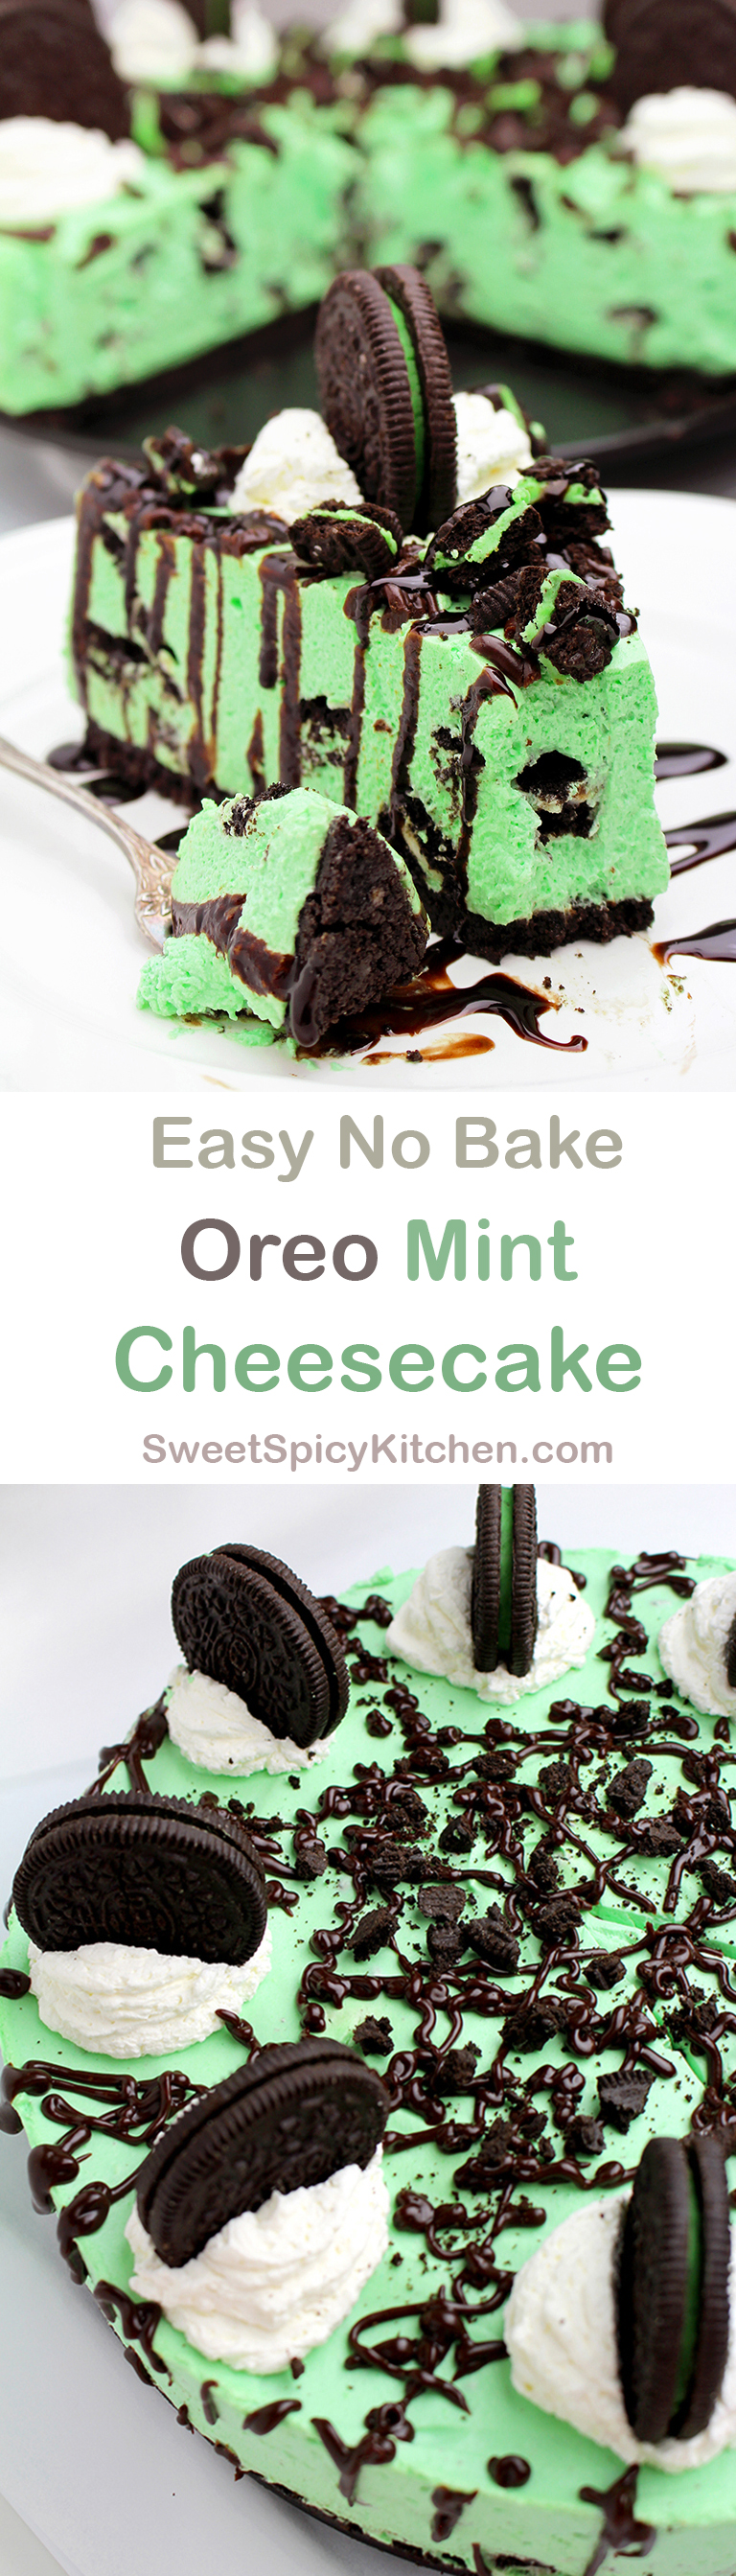 Easy No Bake Oreo Mint Cheesecake